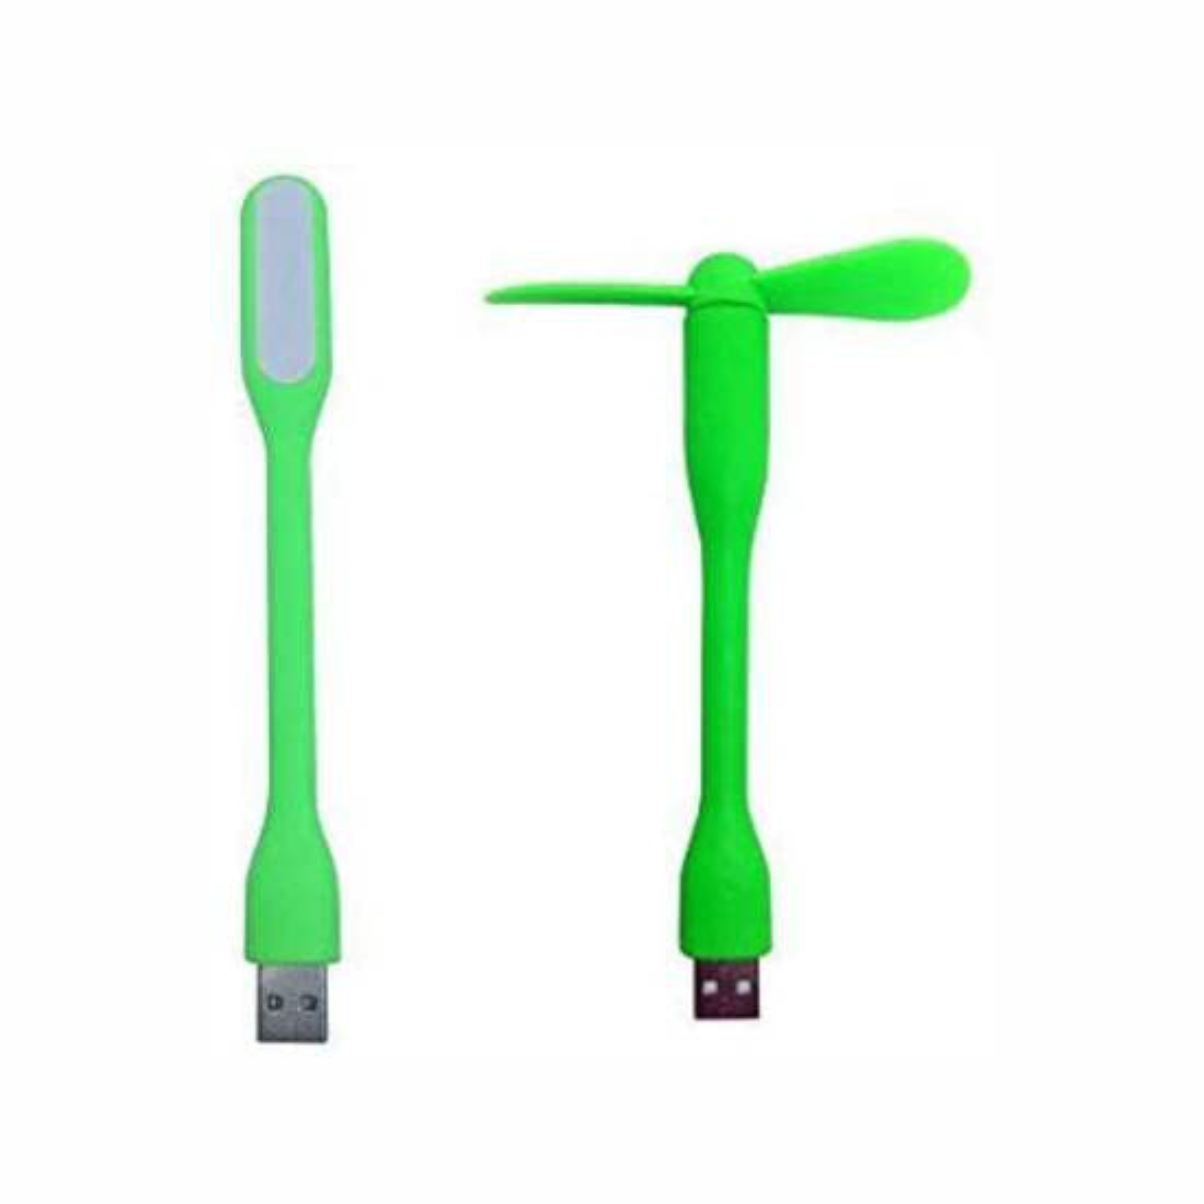 Set Of USB LIGHT & USB Fan Portable & Flexible For PC, Laptop, Mobile, Power Bank - Combo of 2  (Multicolor)